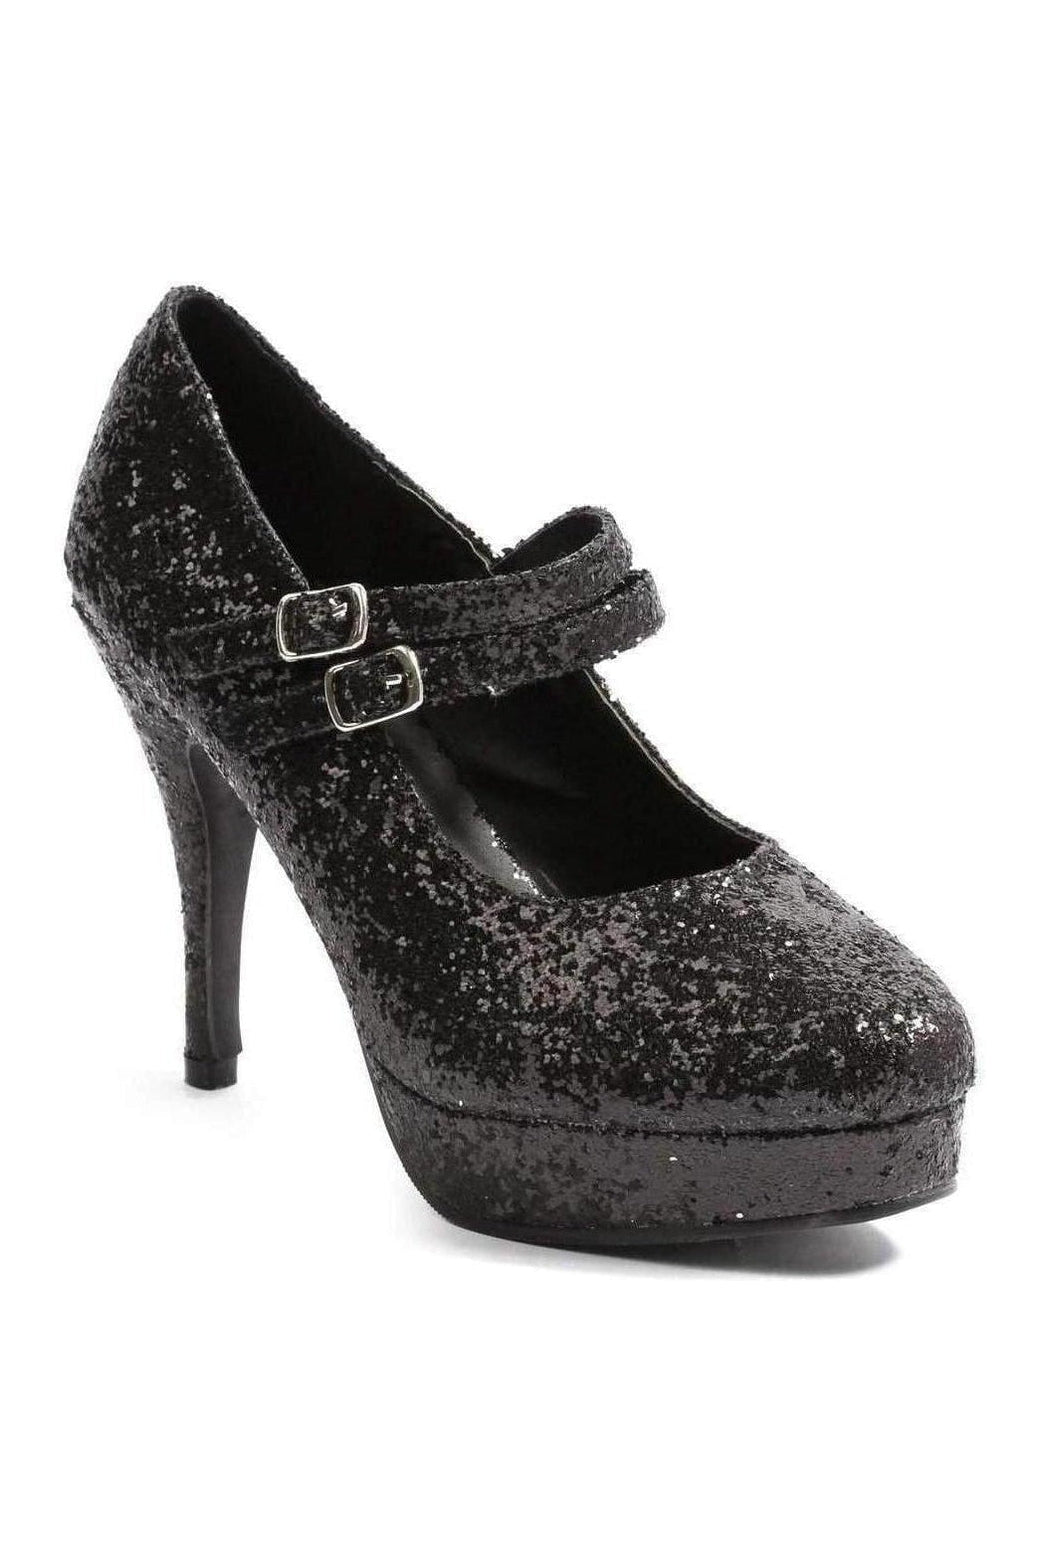 421-JANE-G Mary Jane | Black Glitter-Ellie Shoes-Black-Mary Janes-SEXYSHOES.COM